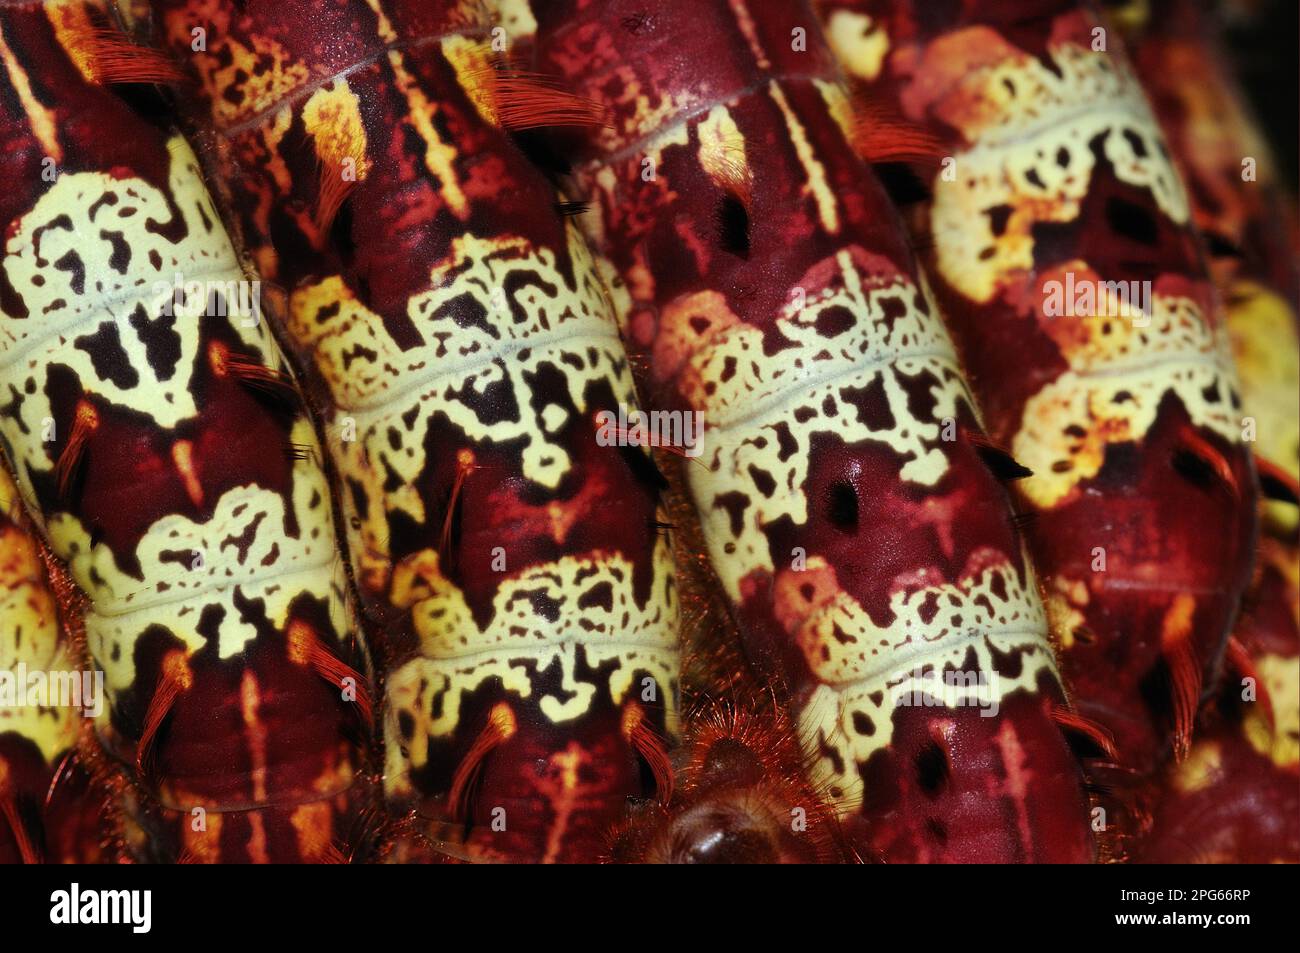 Raupen des Morpho-Schmetterlings (Morpho telemachus), Nahaufnahme der Aggregation, Muster auf der Rückseite, Alta Floresta, Mato Grosso, Brasilien Stockfoto